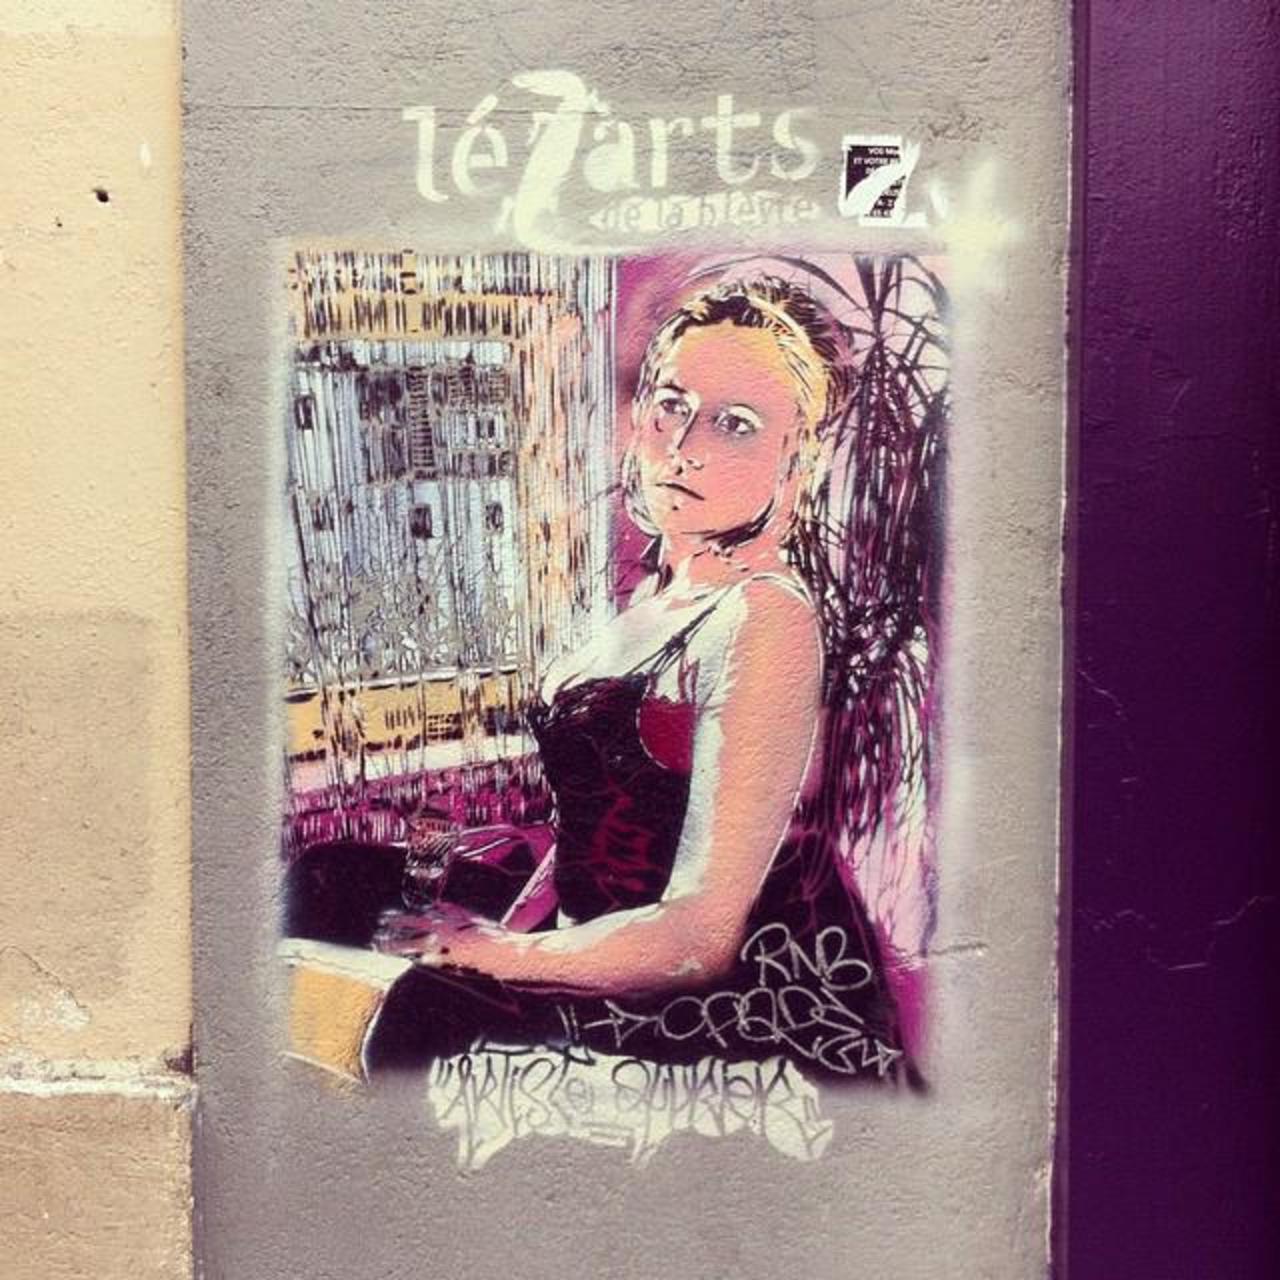 #Paris #graffiti photo by @benstagramin http://ift.tt/1LTR2Jv #StreetArt http://t.co/pQiR2isgH7